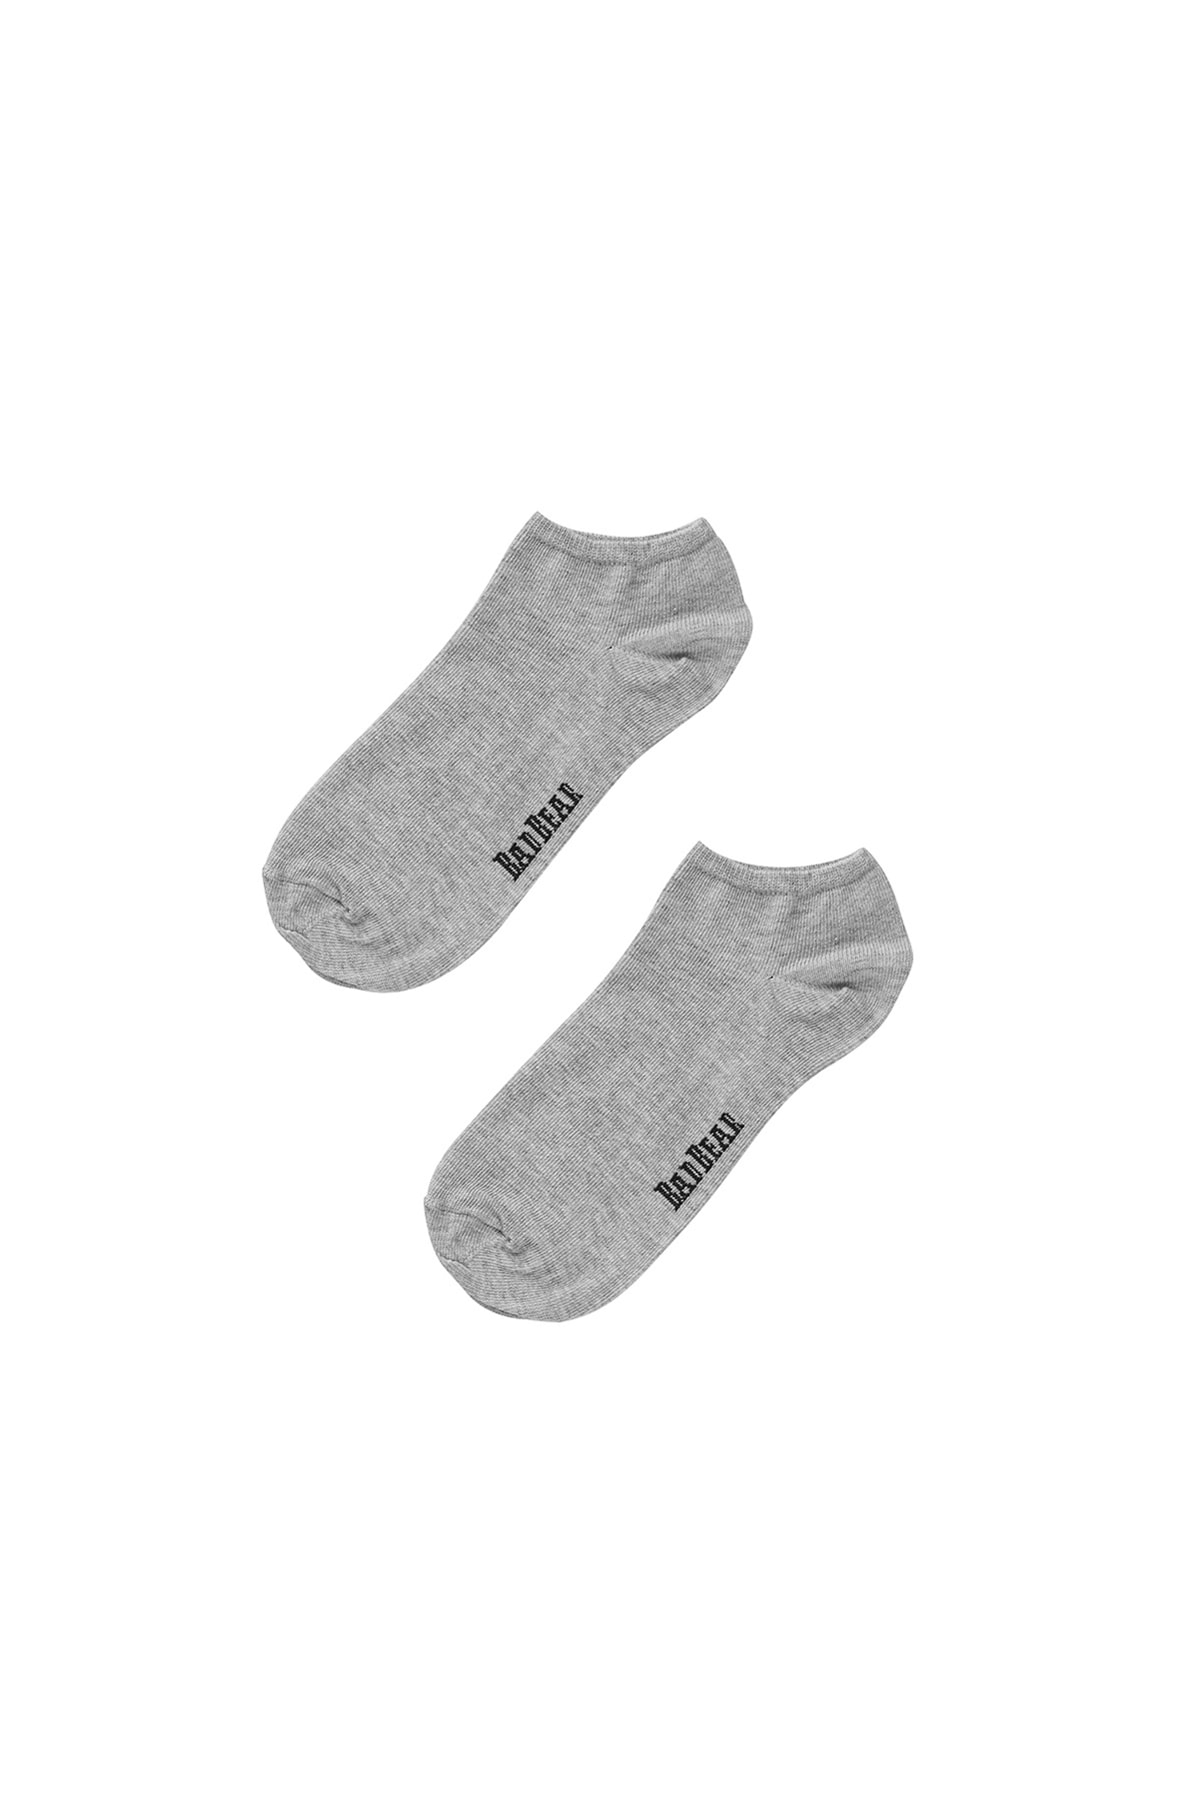 Bad Bear Socken Grau Einzeln